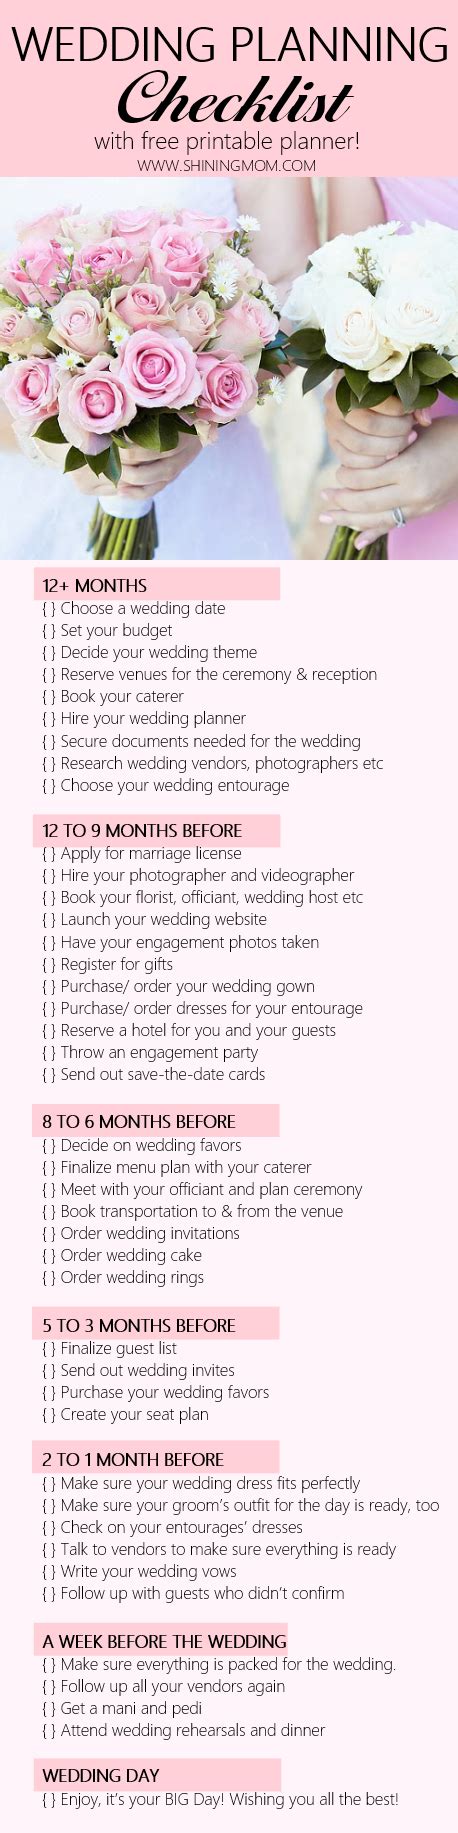 Free Printable Wedding Planner With Wedding Checklist